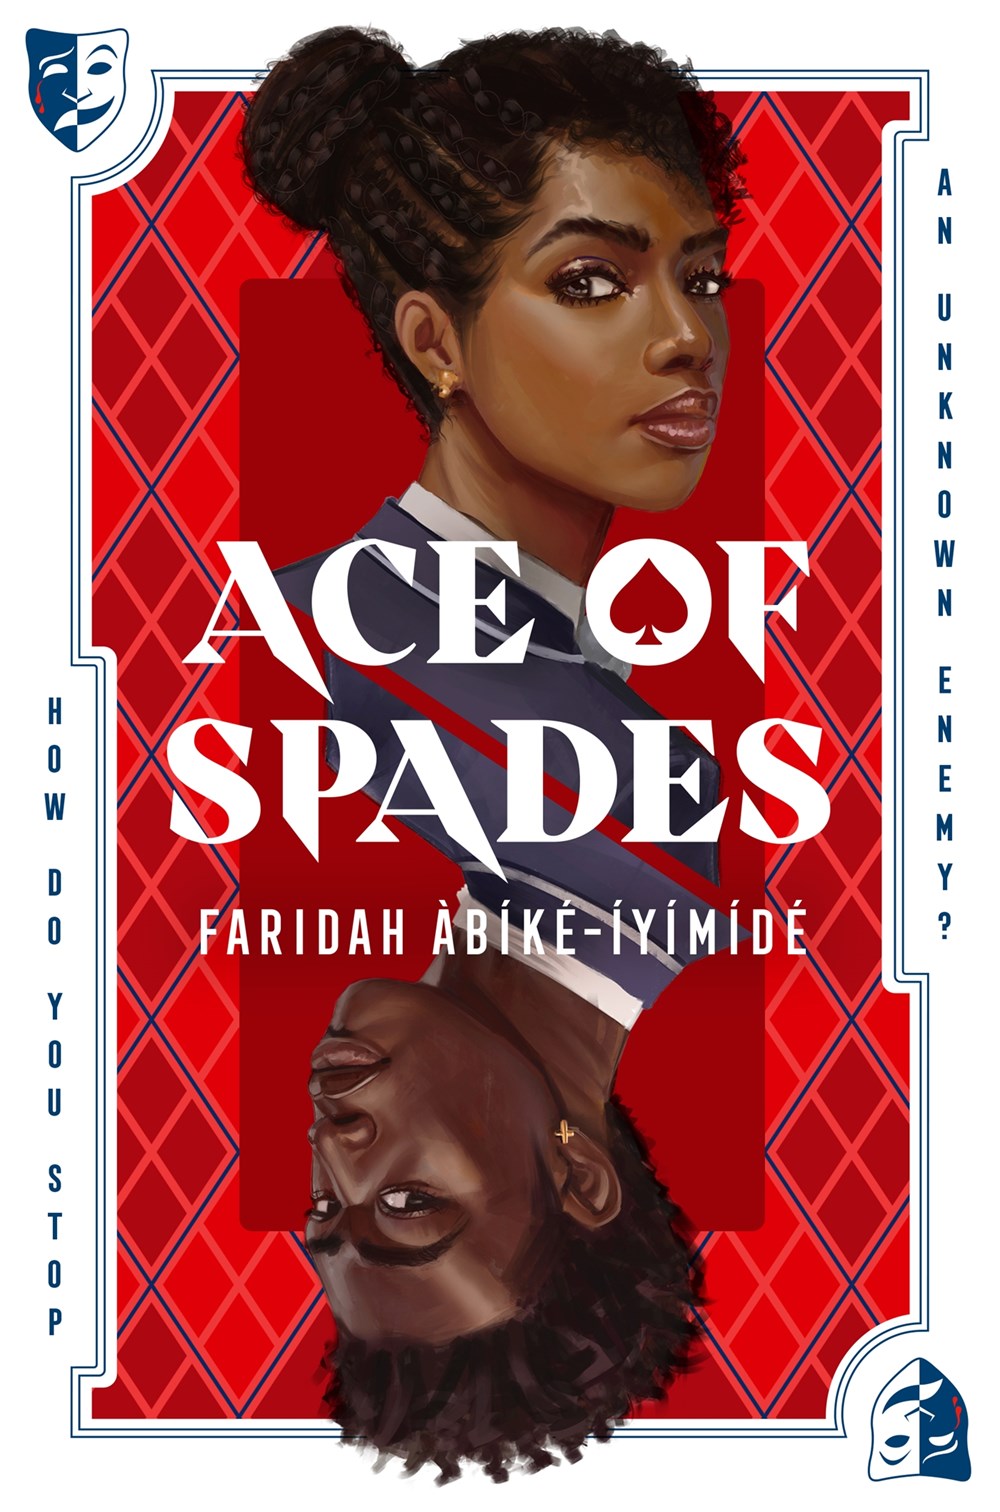 ace of spades ya book